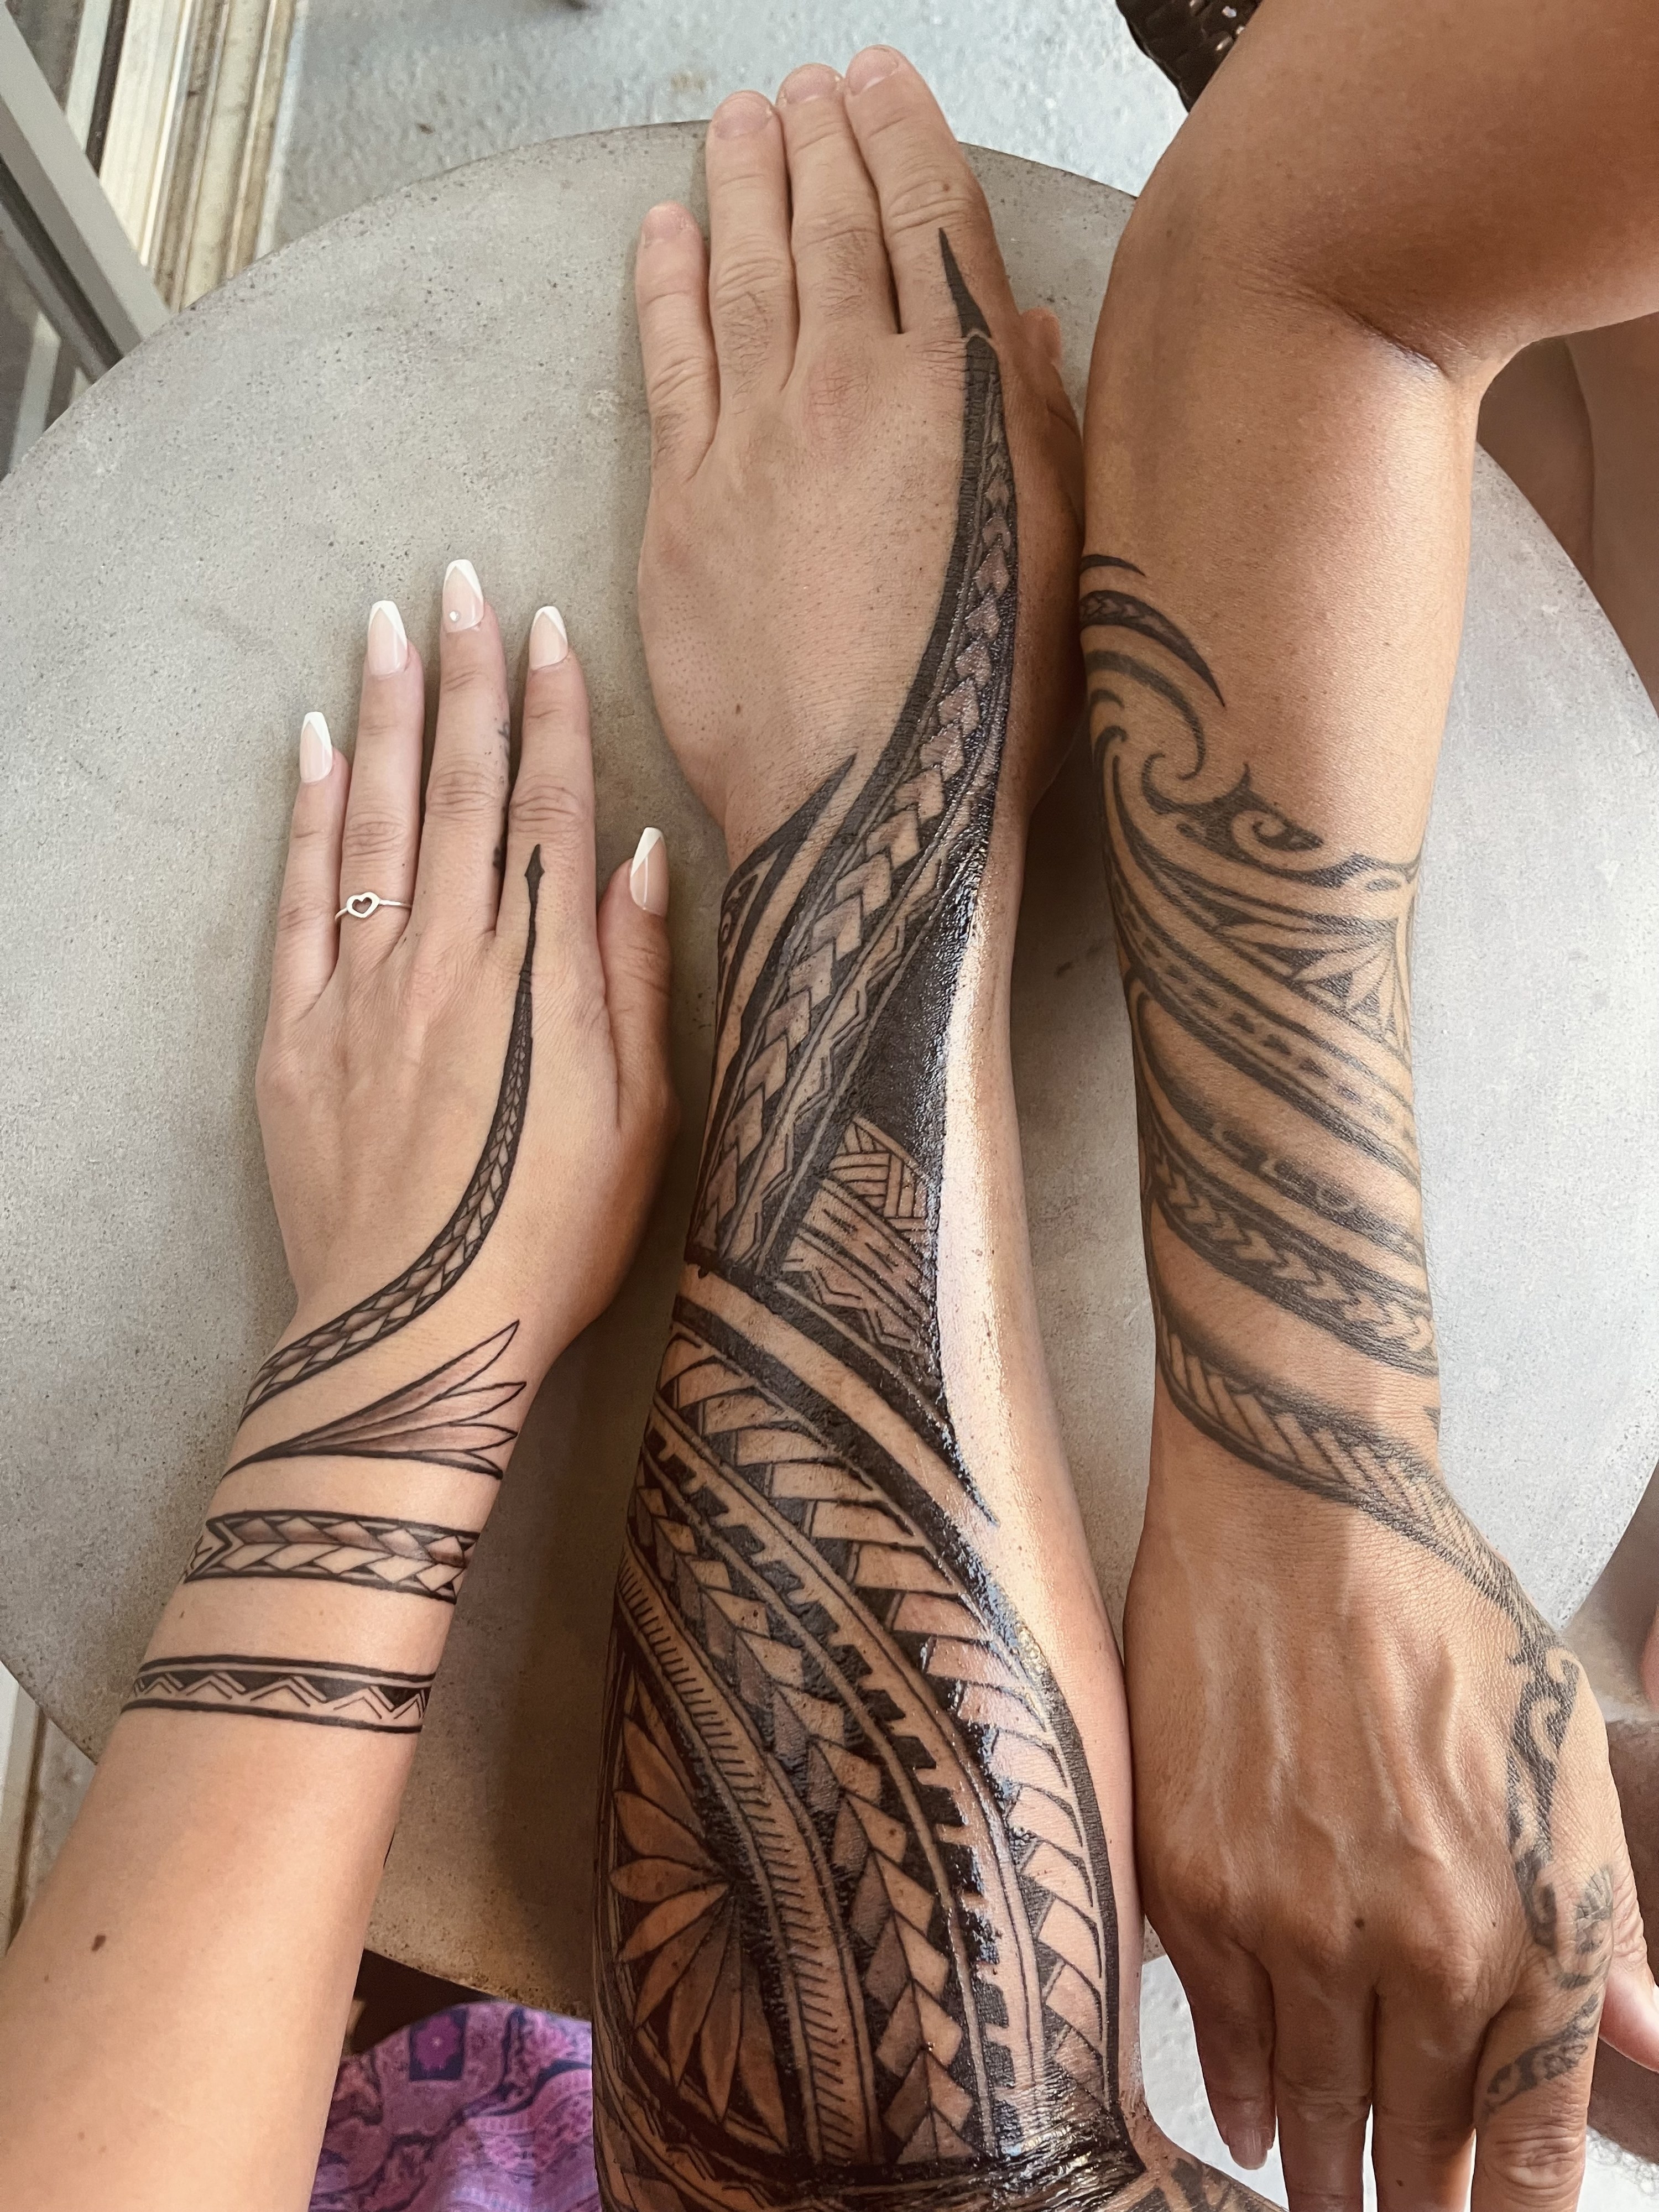 60+ Best Samoan Tattoo Designs & Meanings - Tribal Patterns (2019)